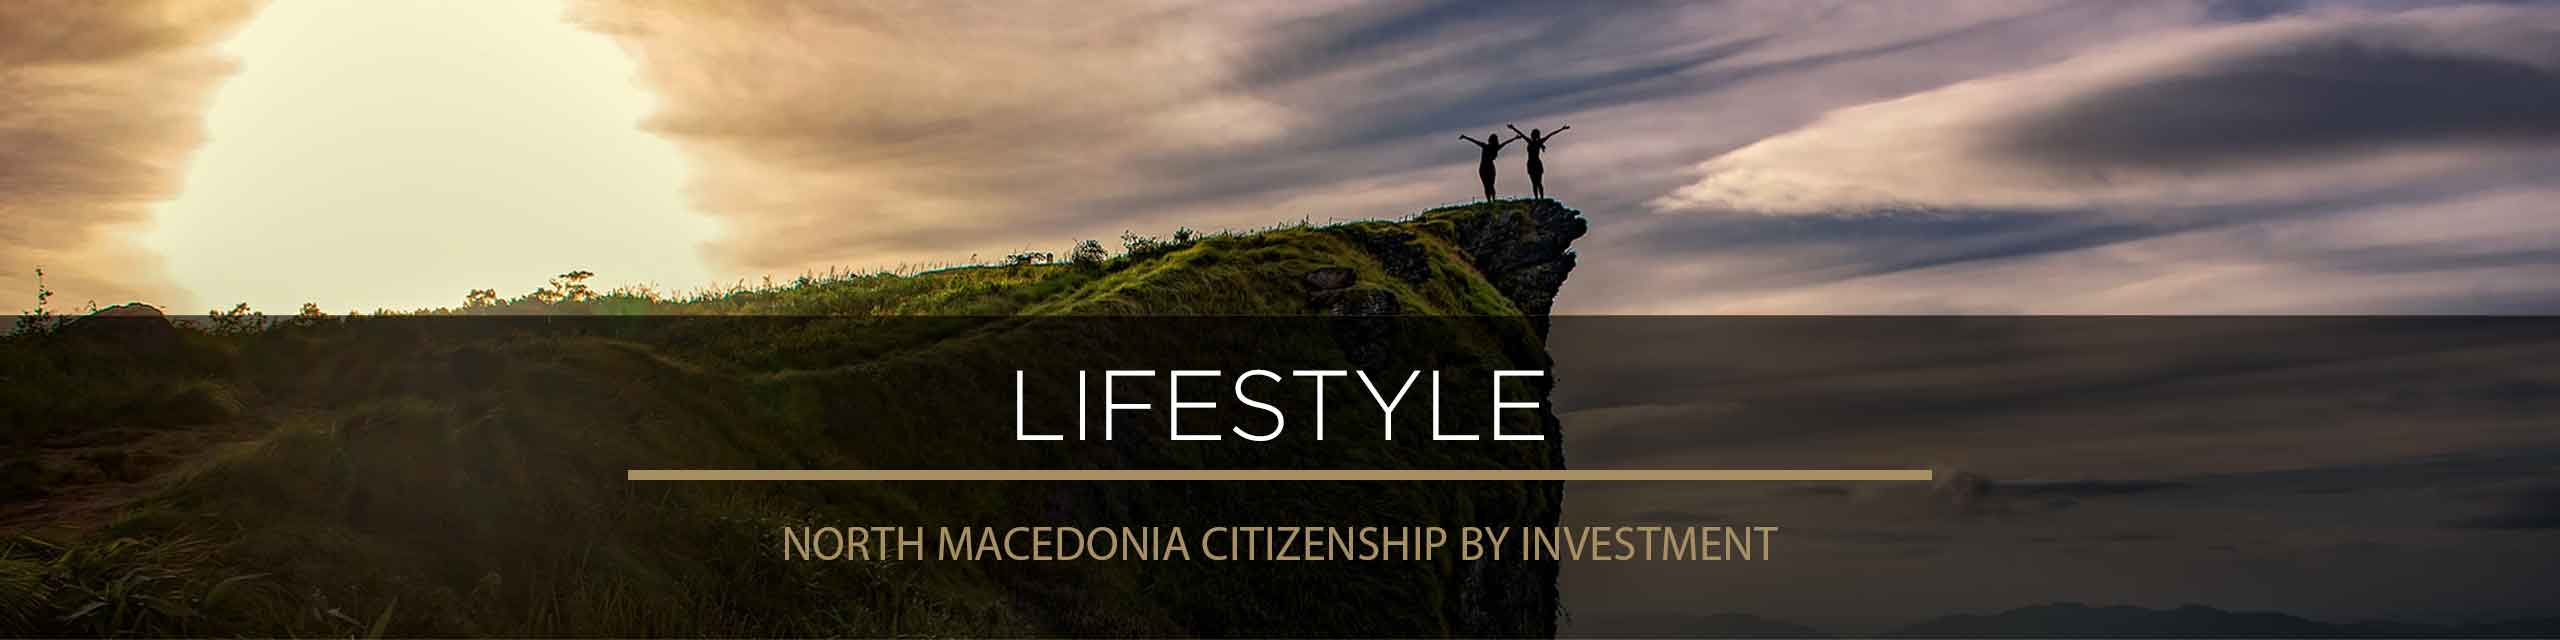 North Macedonia Life Style